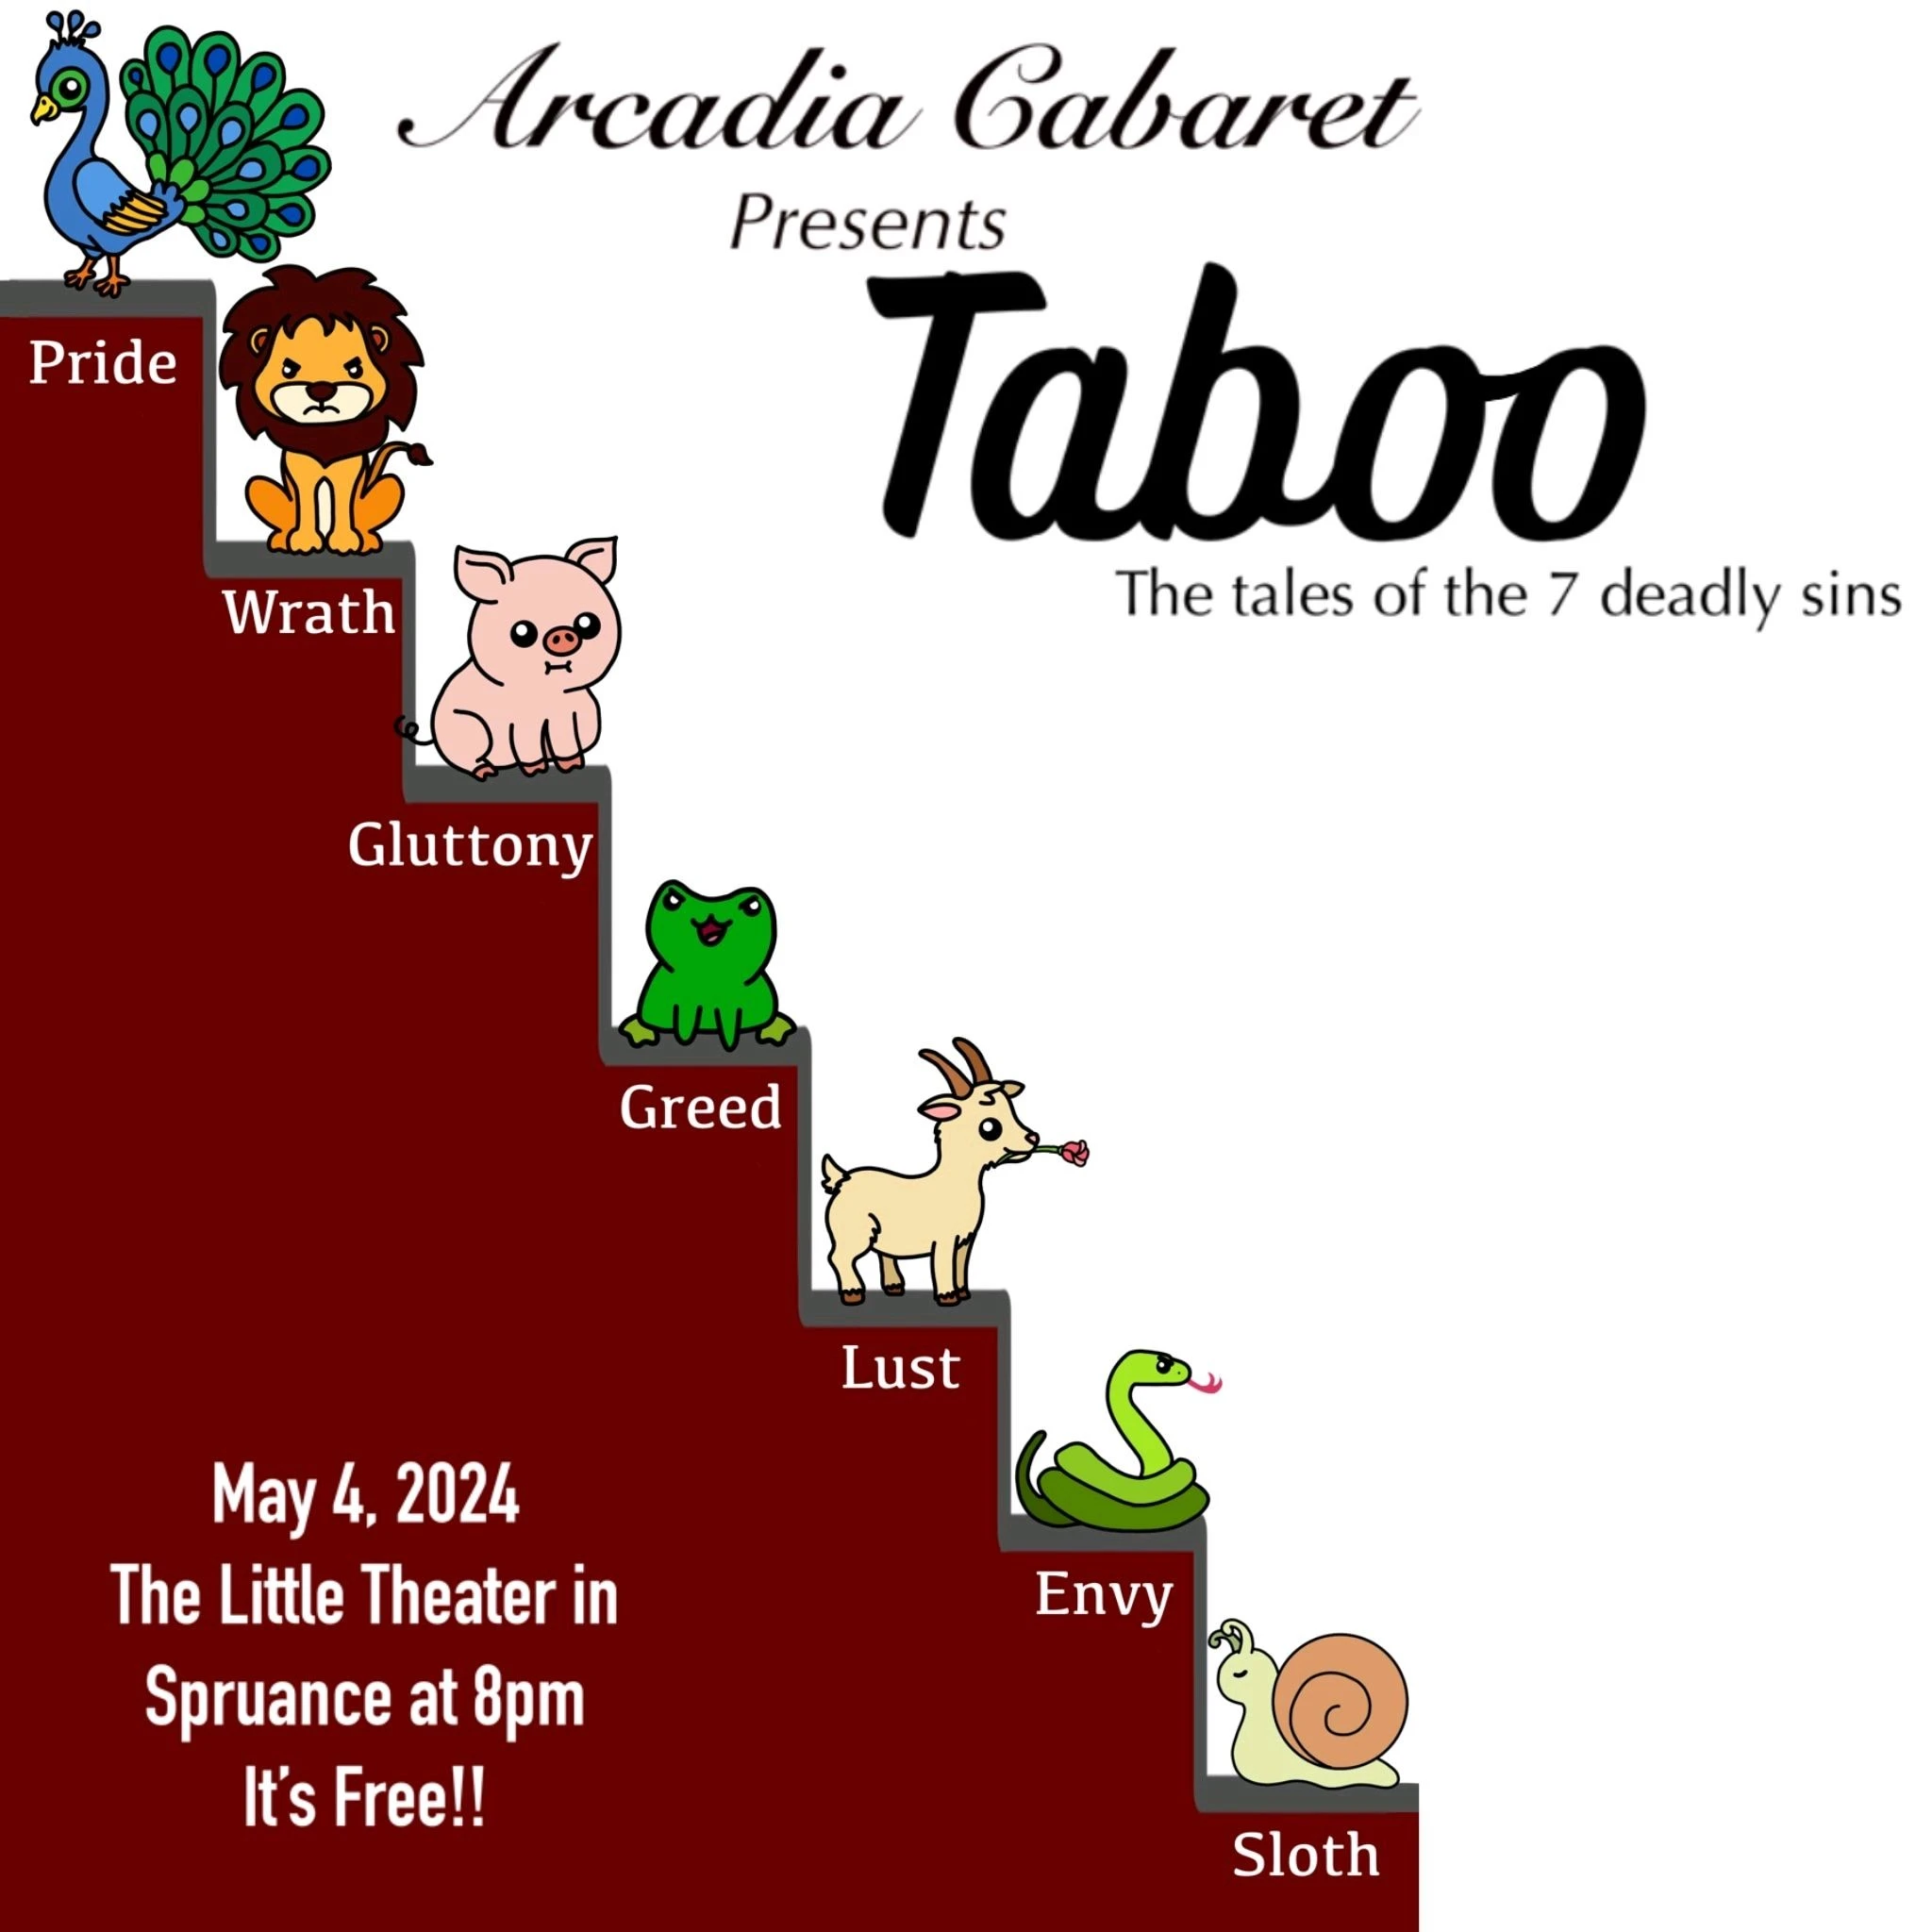 Arcadia Cabaret presents Taboo.